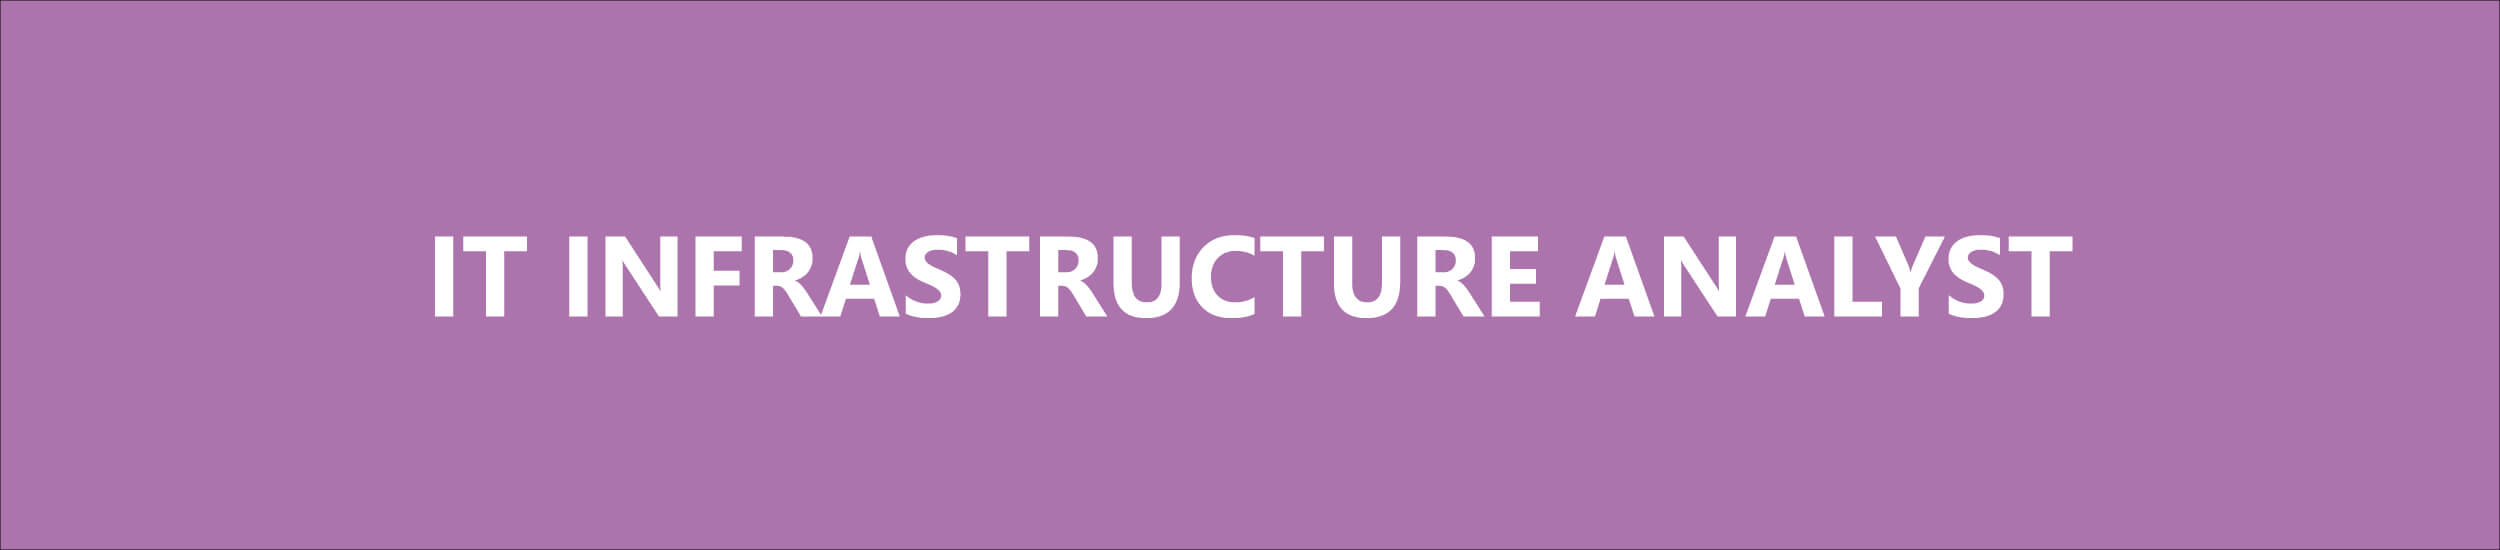 IT-Infrastructure-Analyst-Quorum